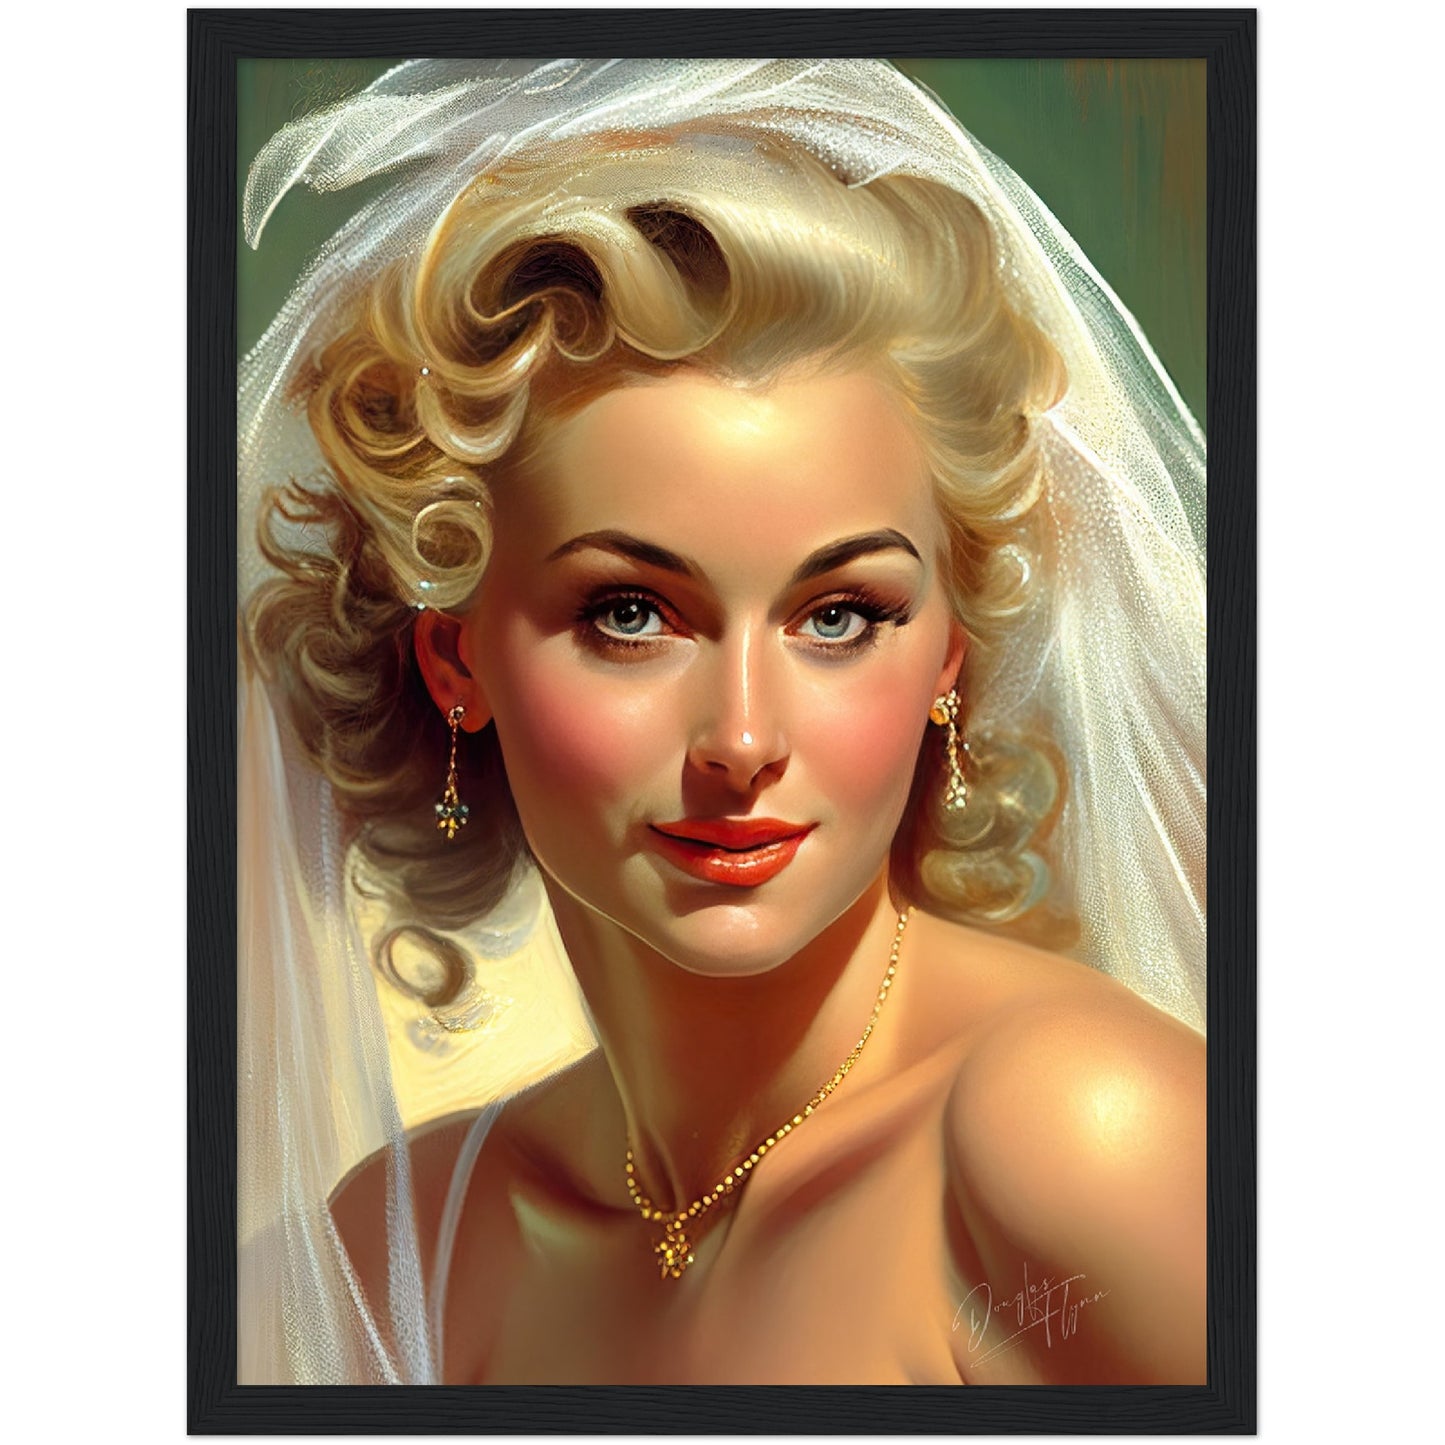 »Bridal Vintage Chic« retro poster